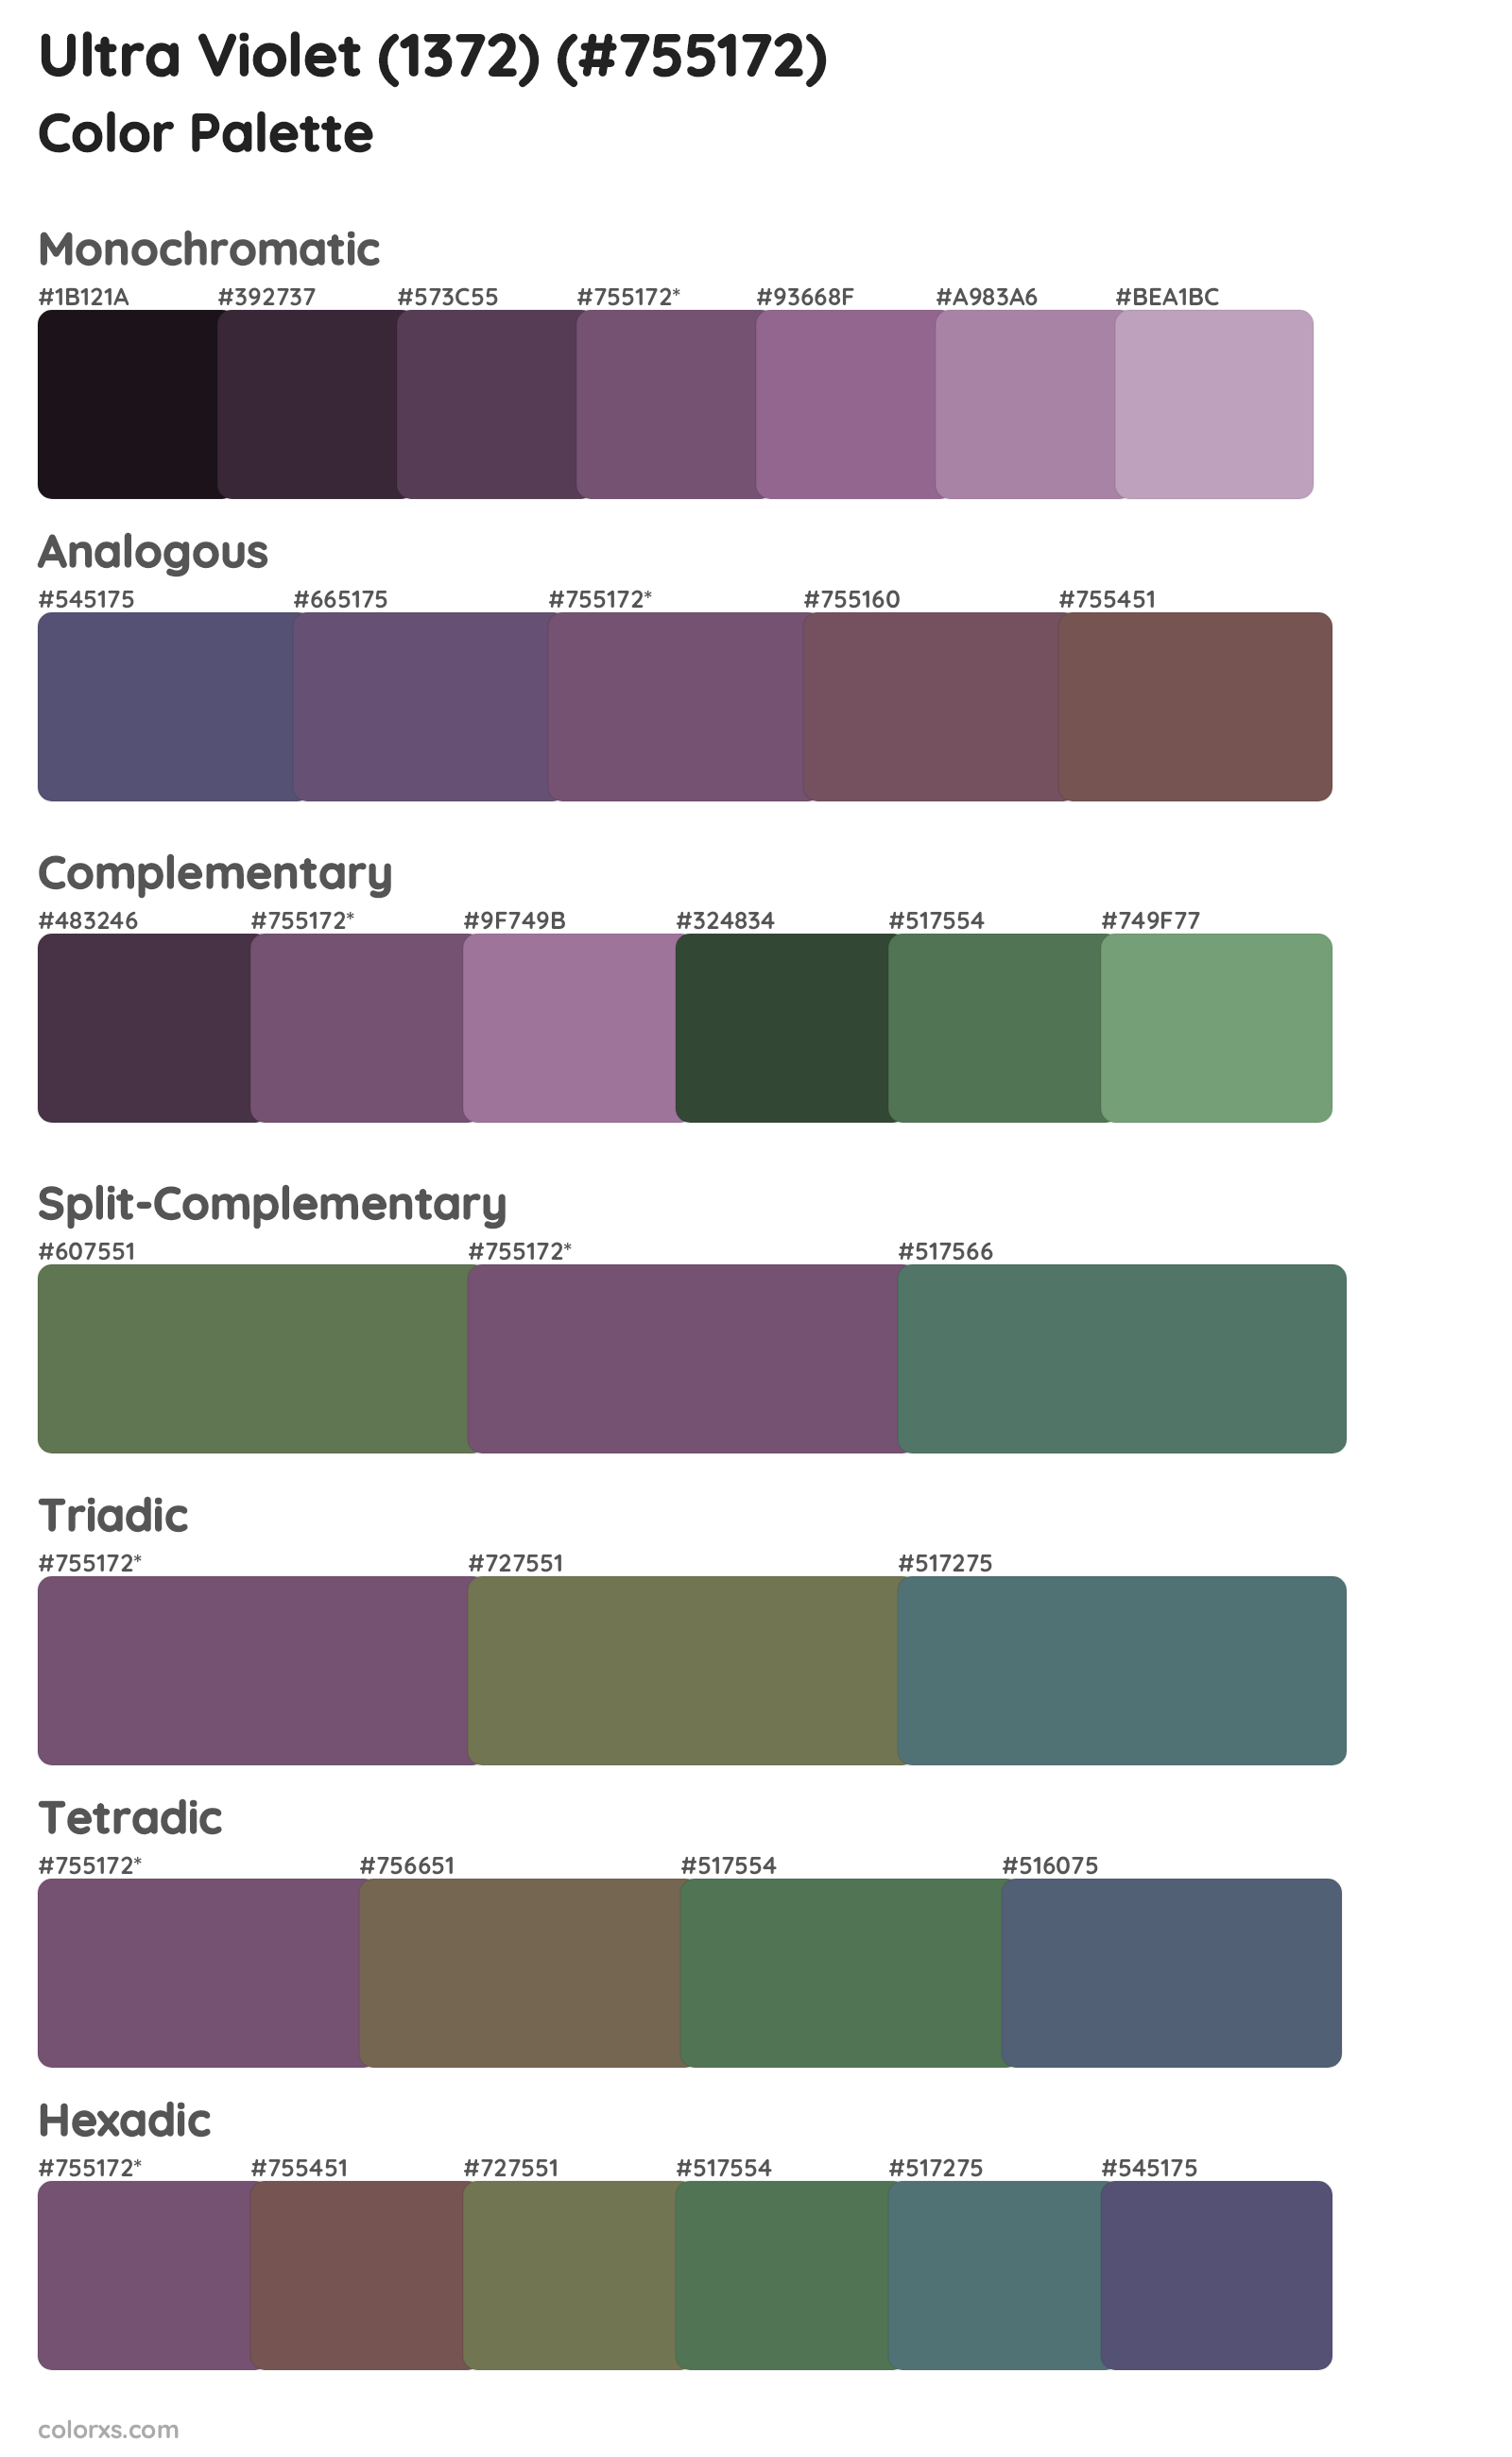 Ultra Violet (1372) Color Scheme Palettes